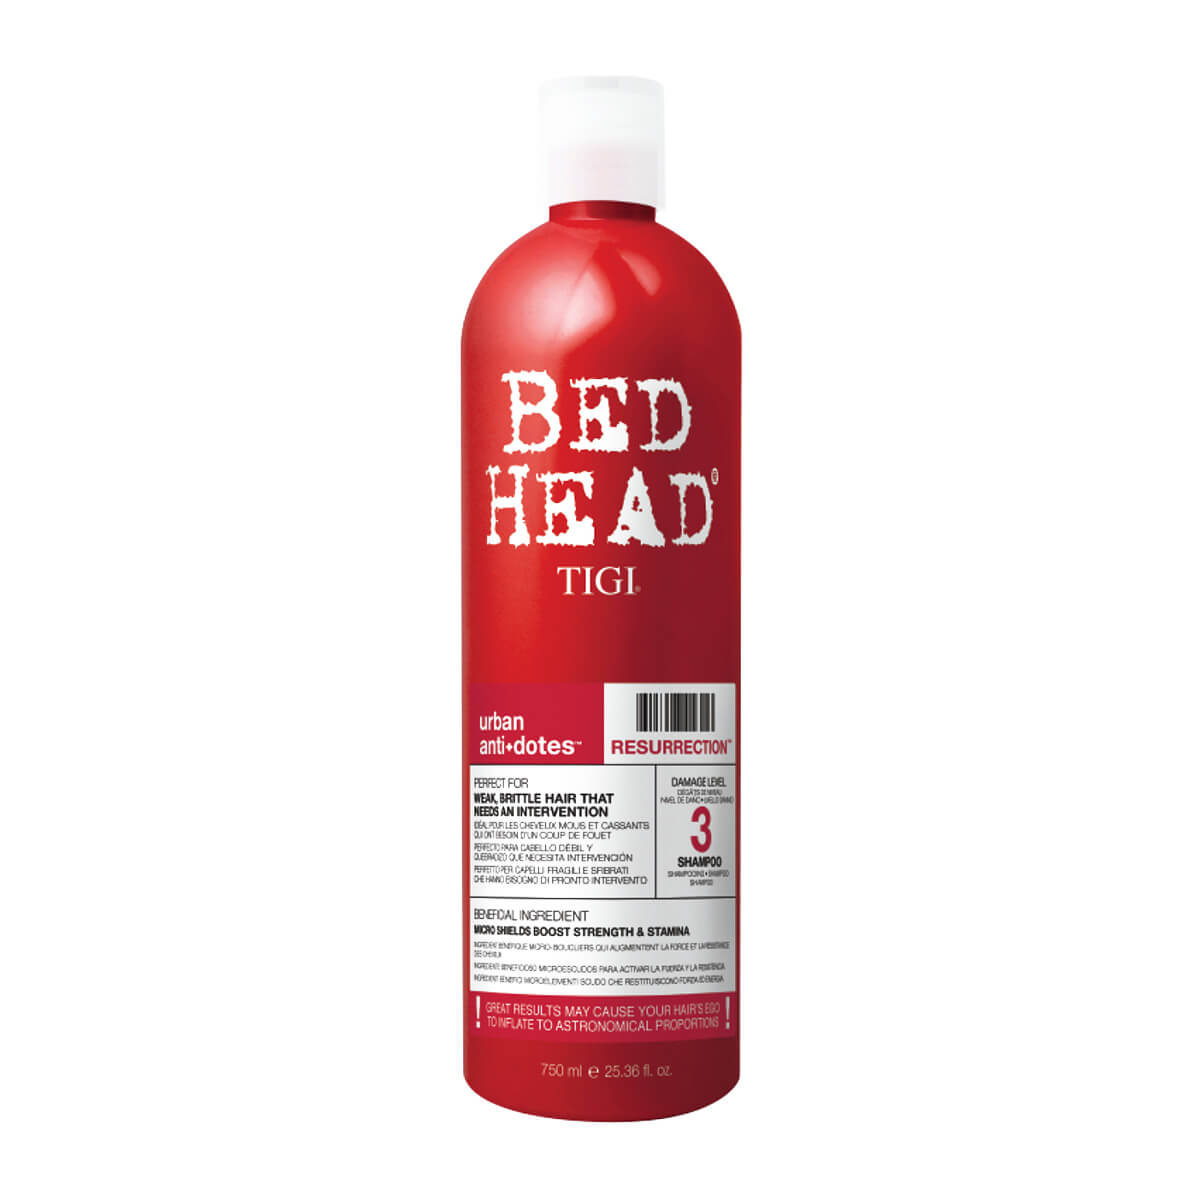 Shampoo Bed Head Urban Anti+Dotes Resurrection 750ml